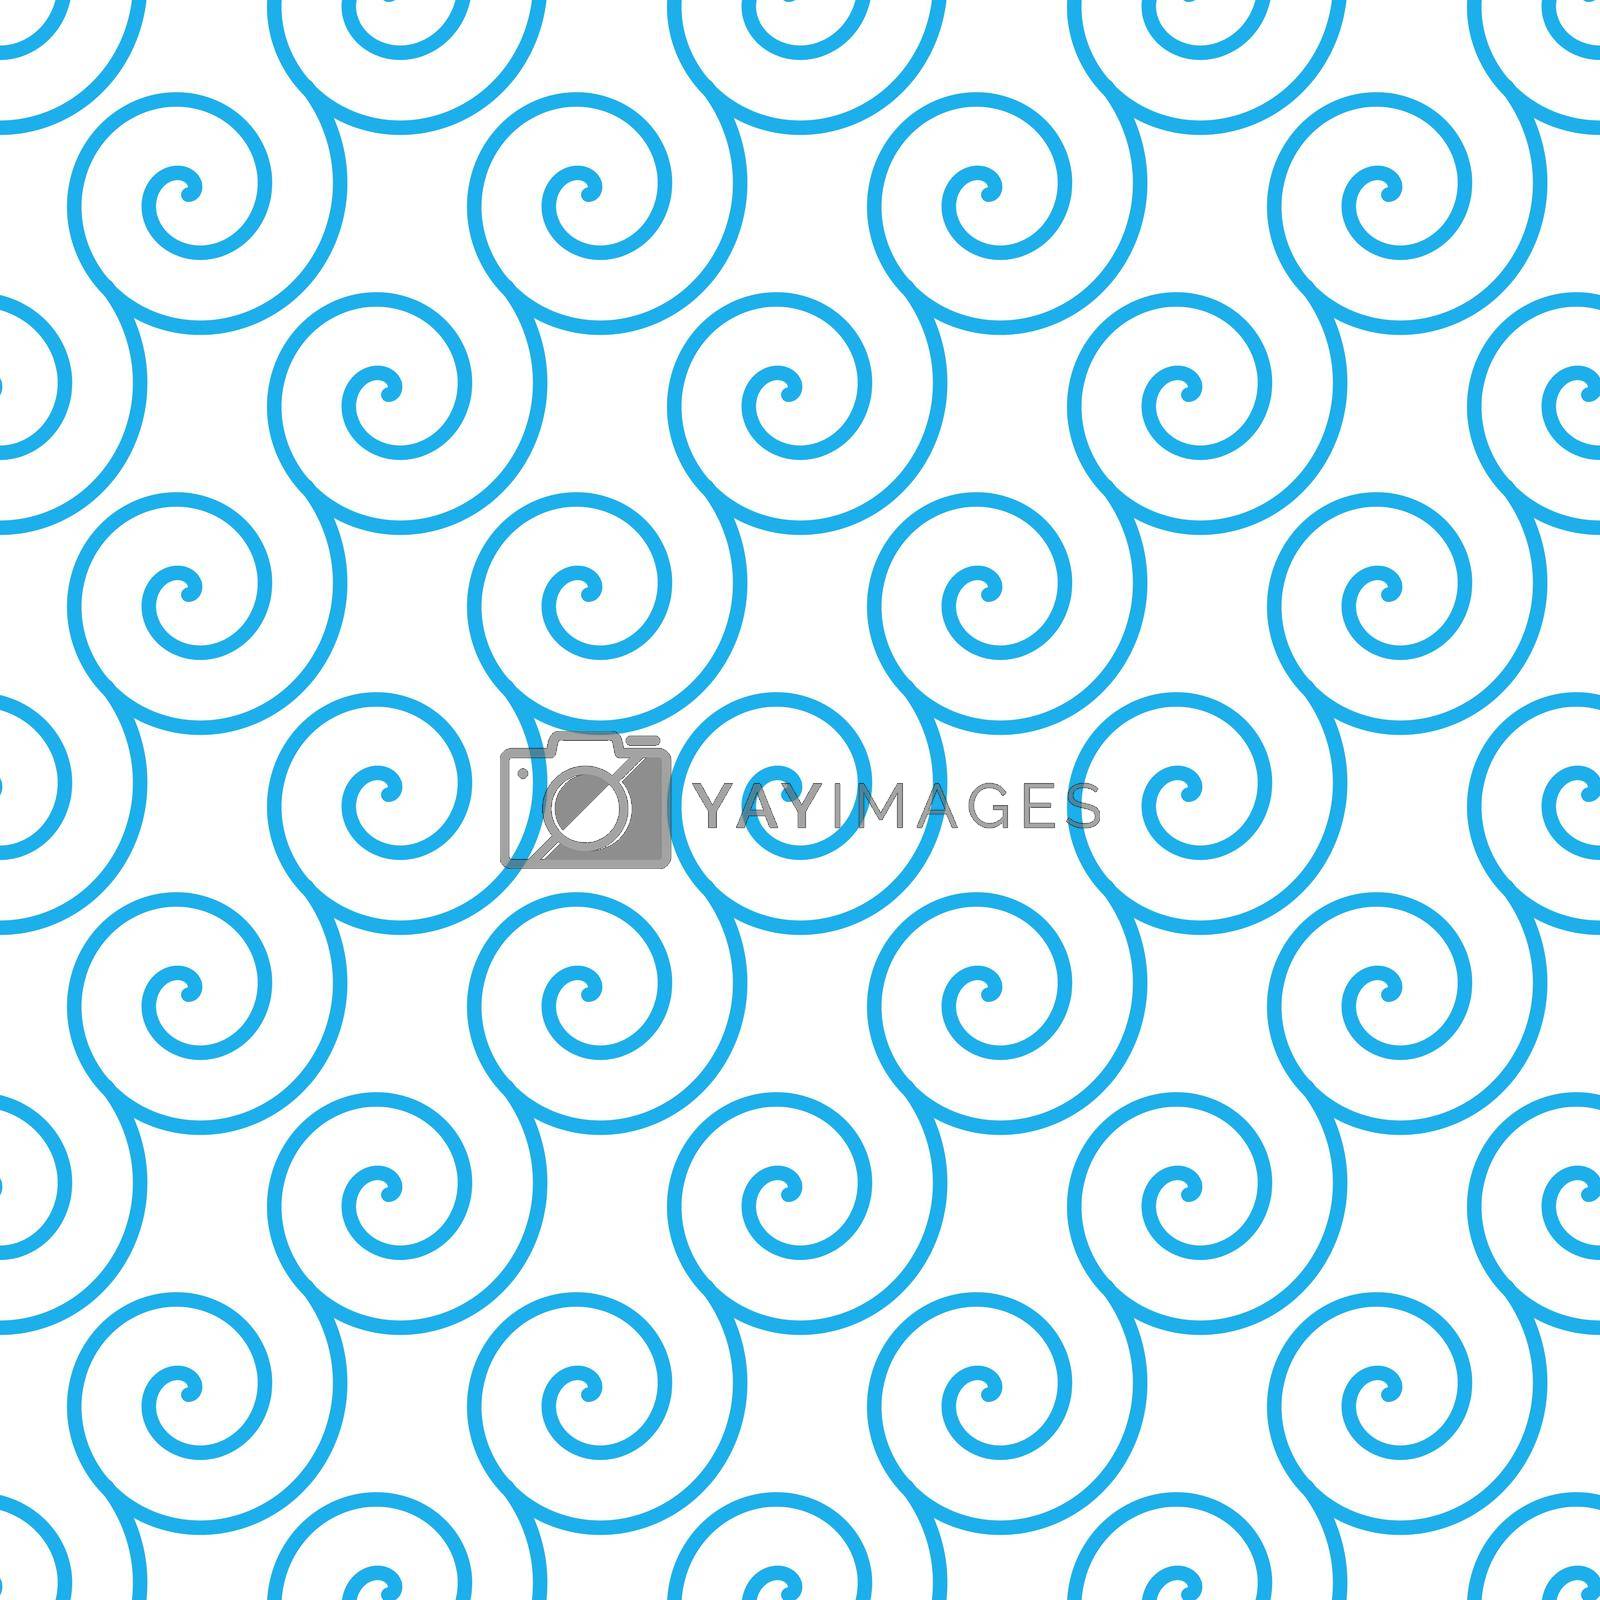 Blue swirl seamless retro pattern. Abstract spiral pattern. Vector illustration